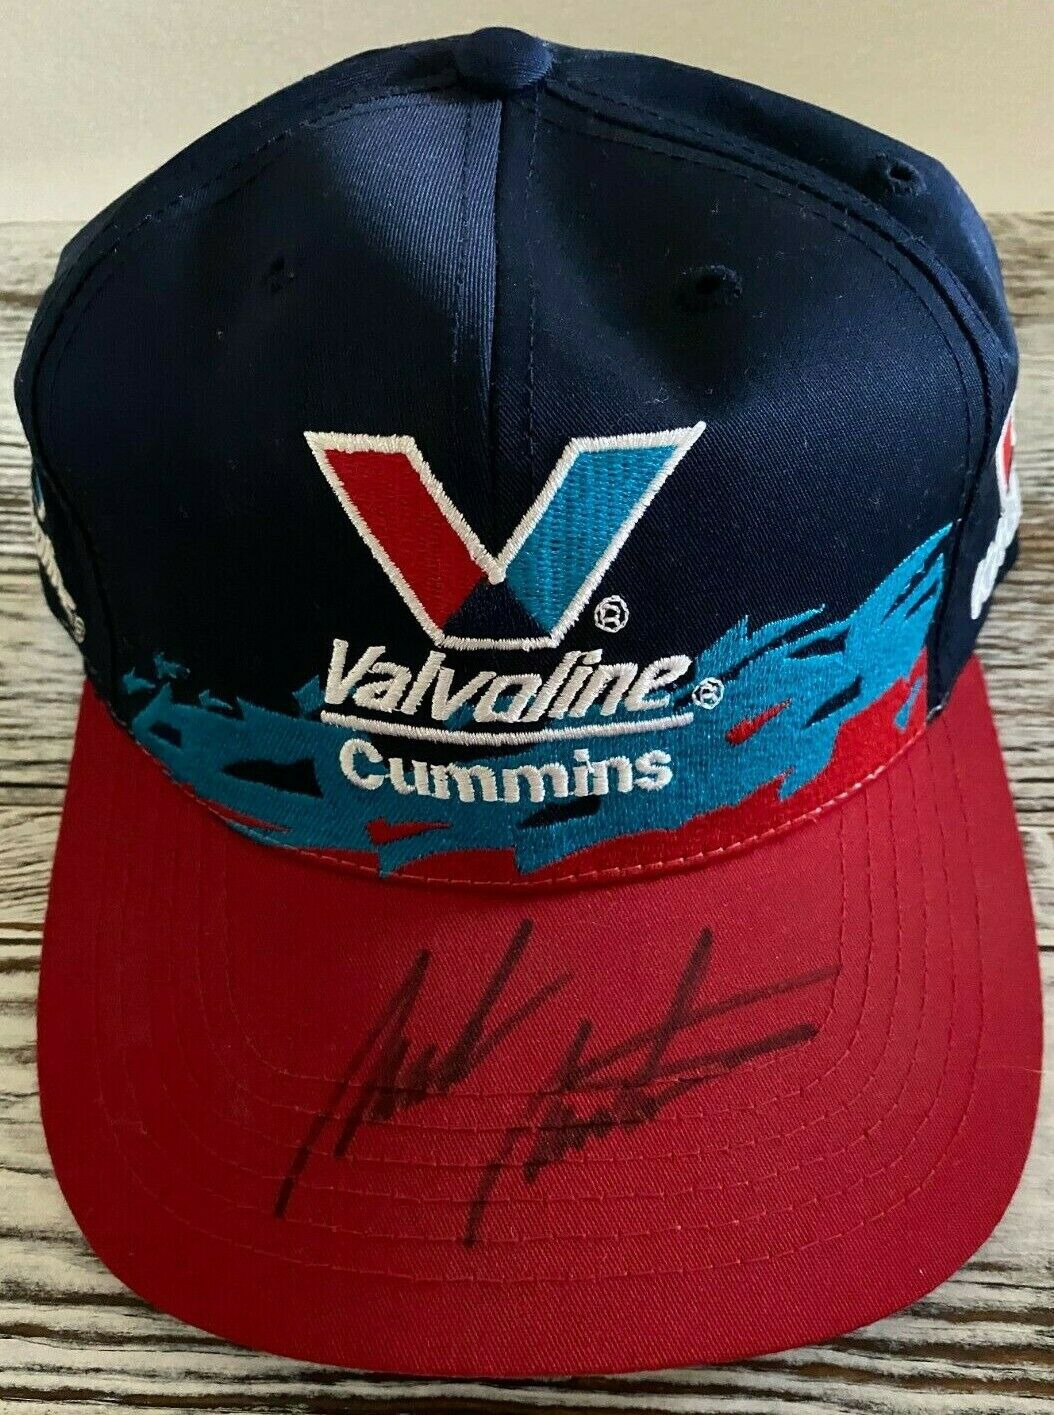 Valvoline Cummins Mark Martin Signed Autographed Crew Hat Cap Nascar